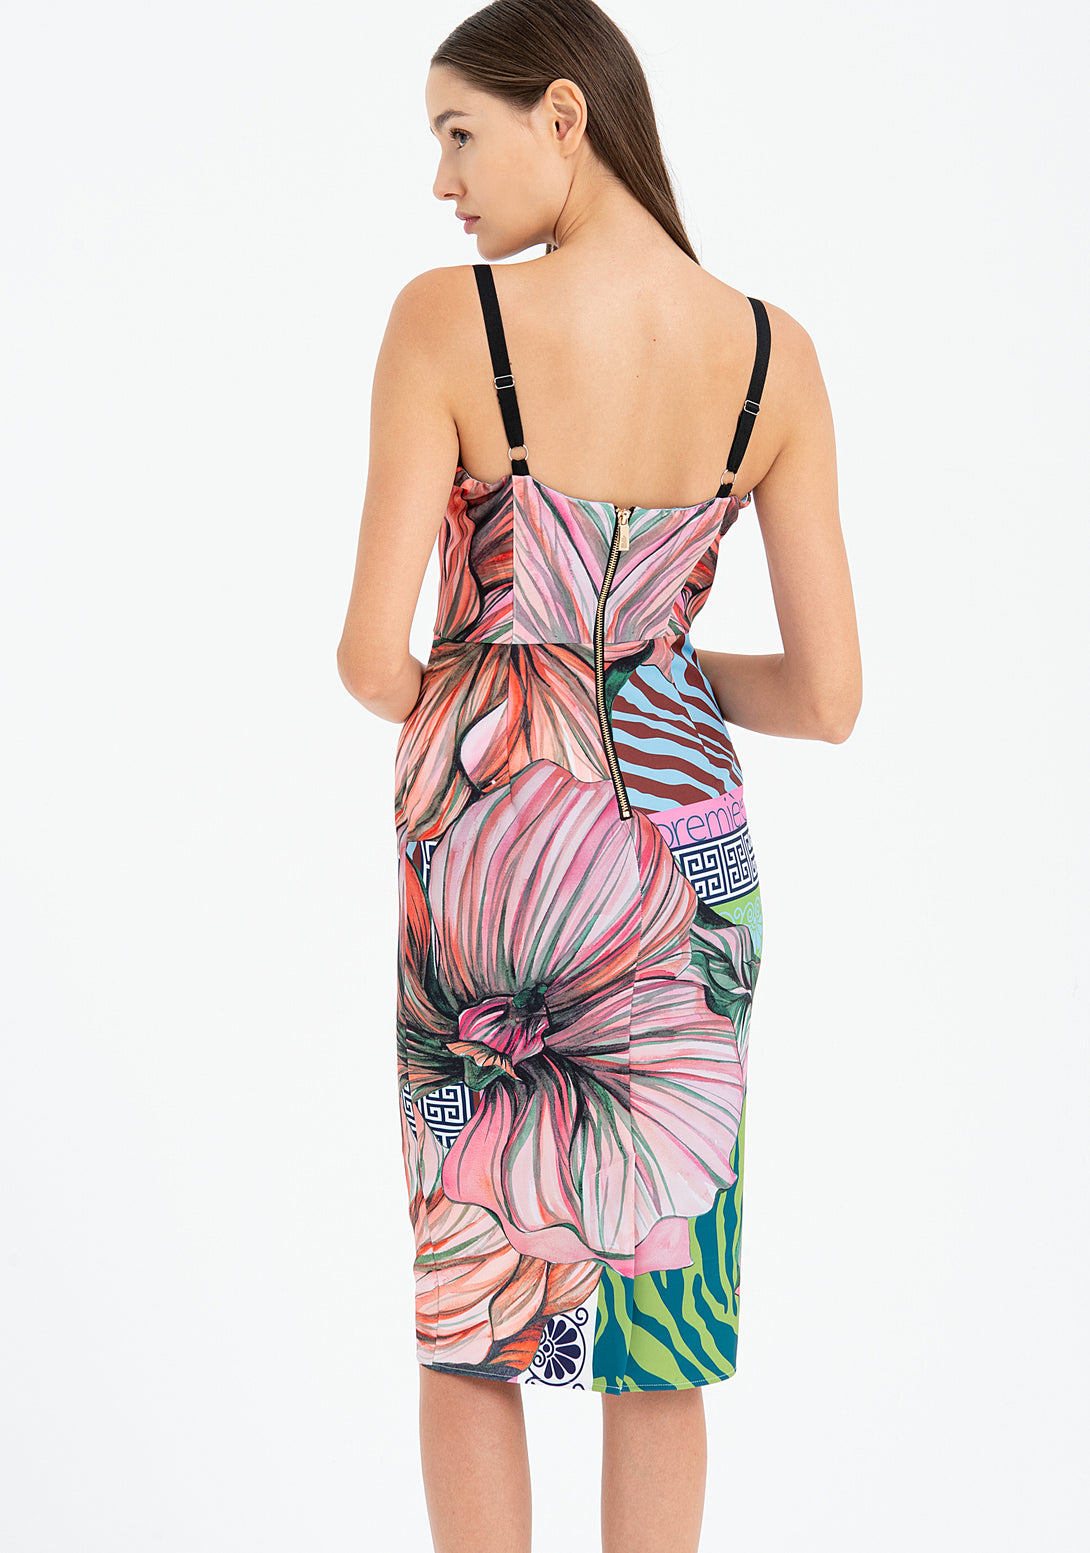 Petticoat dress slim fit with flowery print